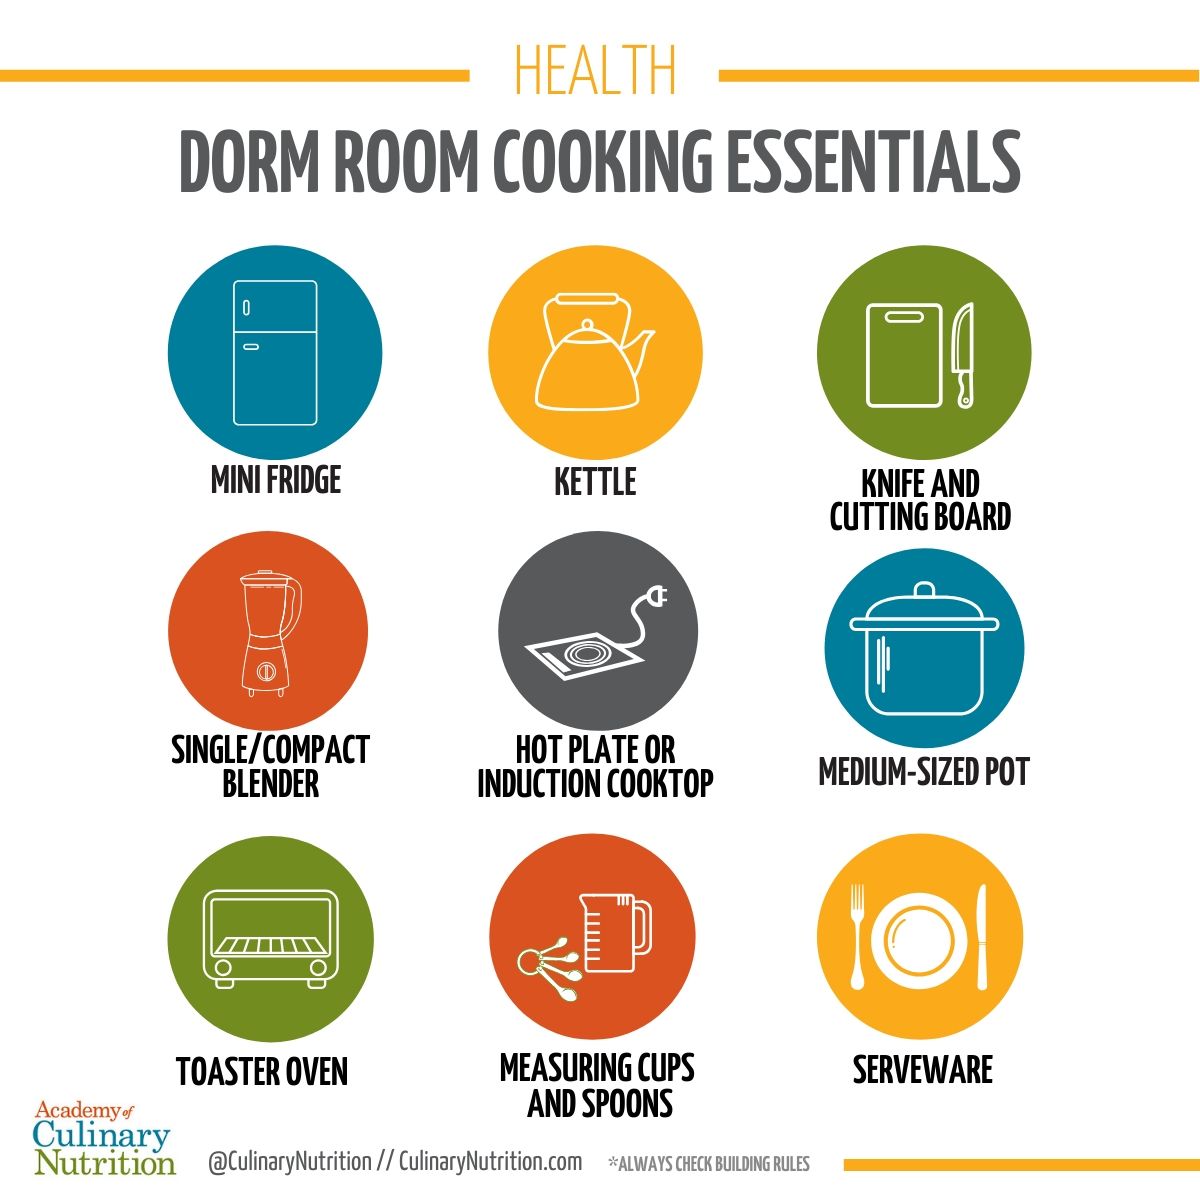 Dorm Room Cooking Essentials